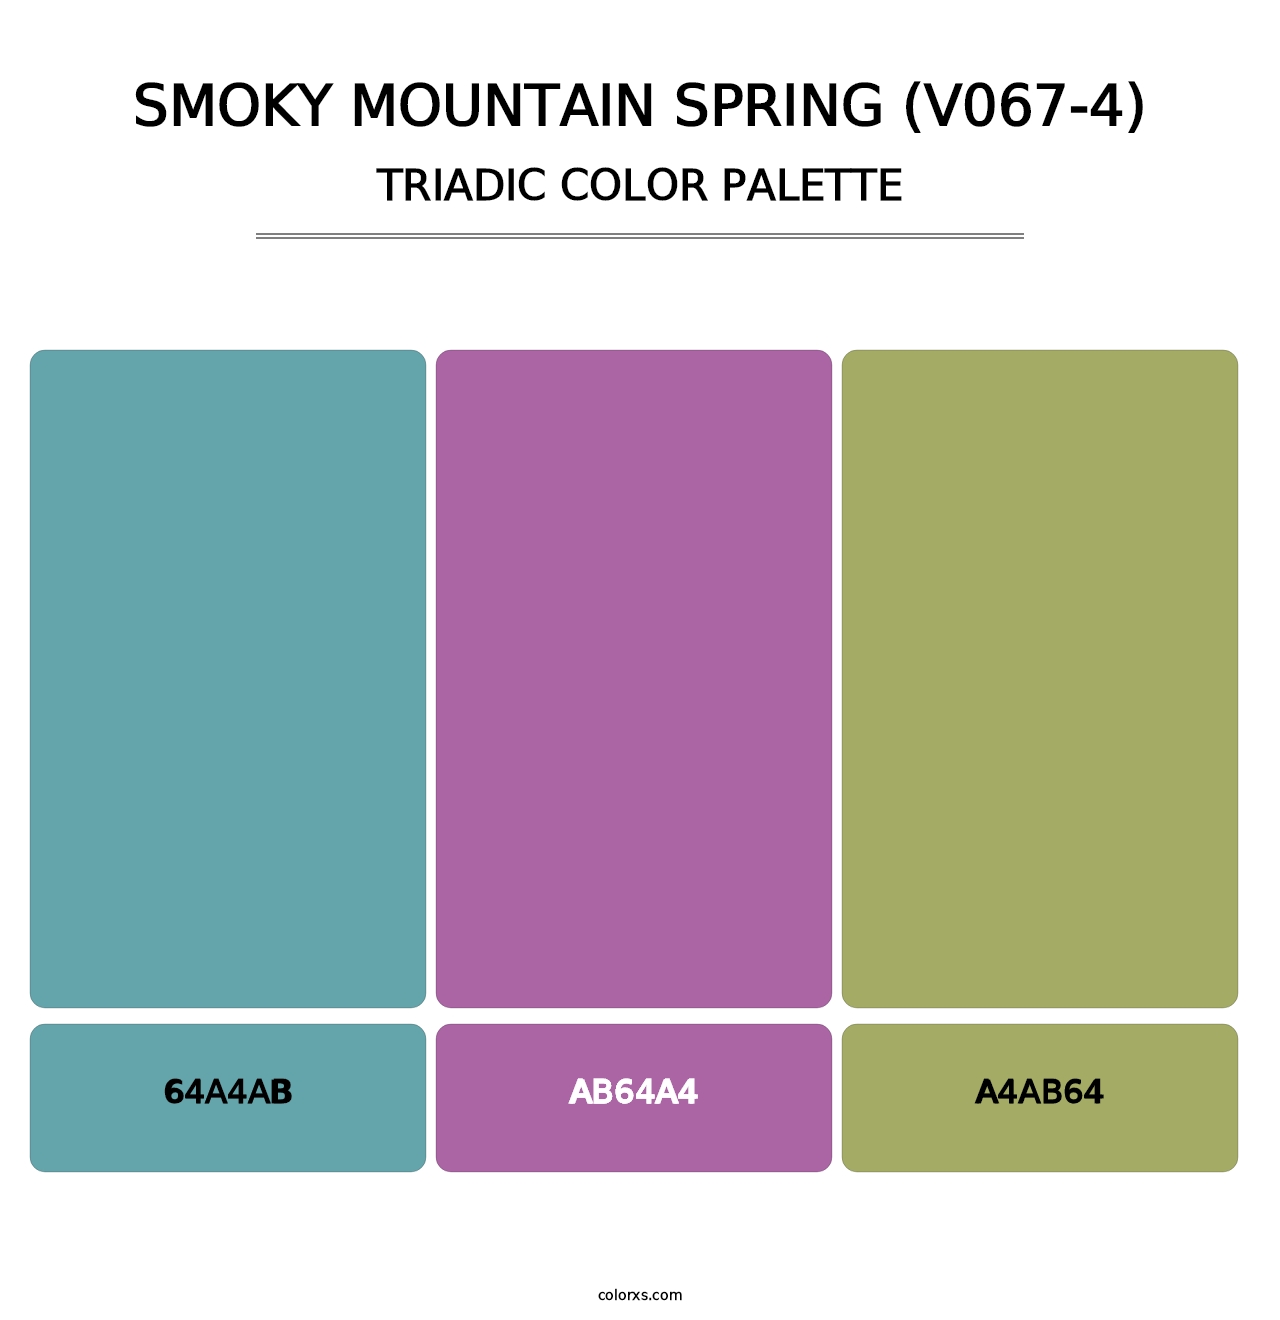 Smoky Mountain Spring (V067-4) - Triadic Color Palette